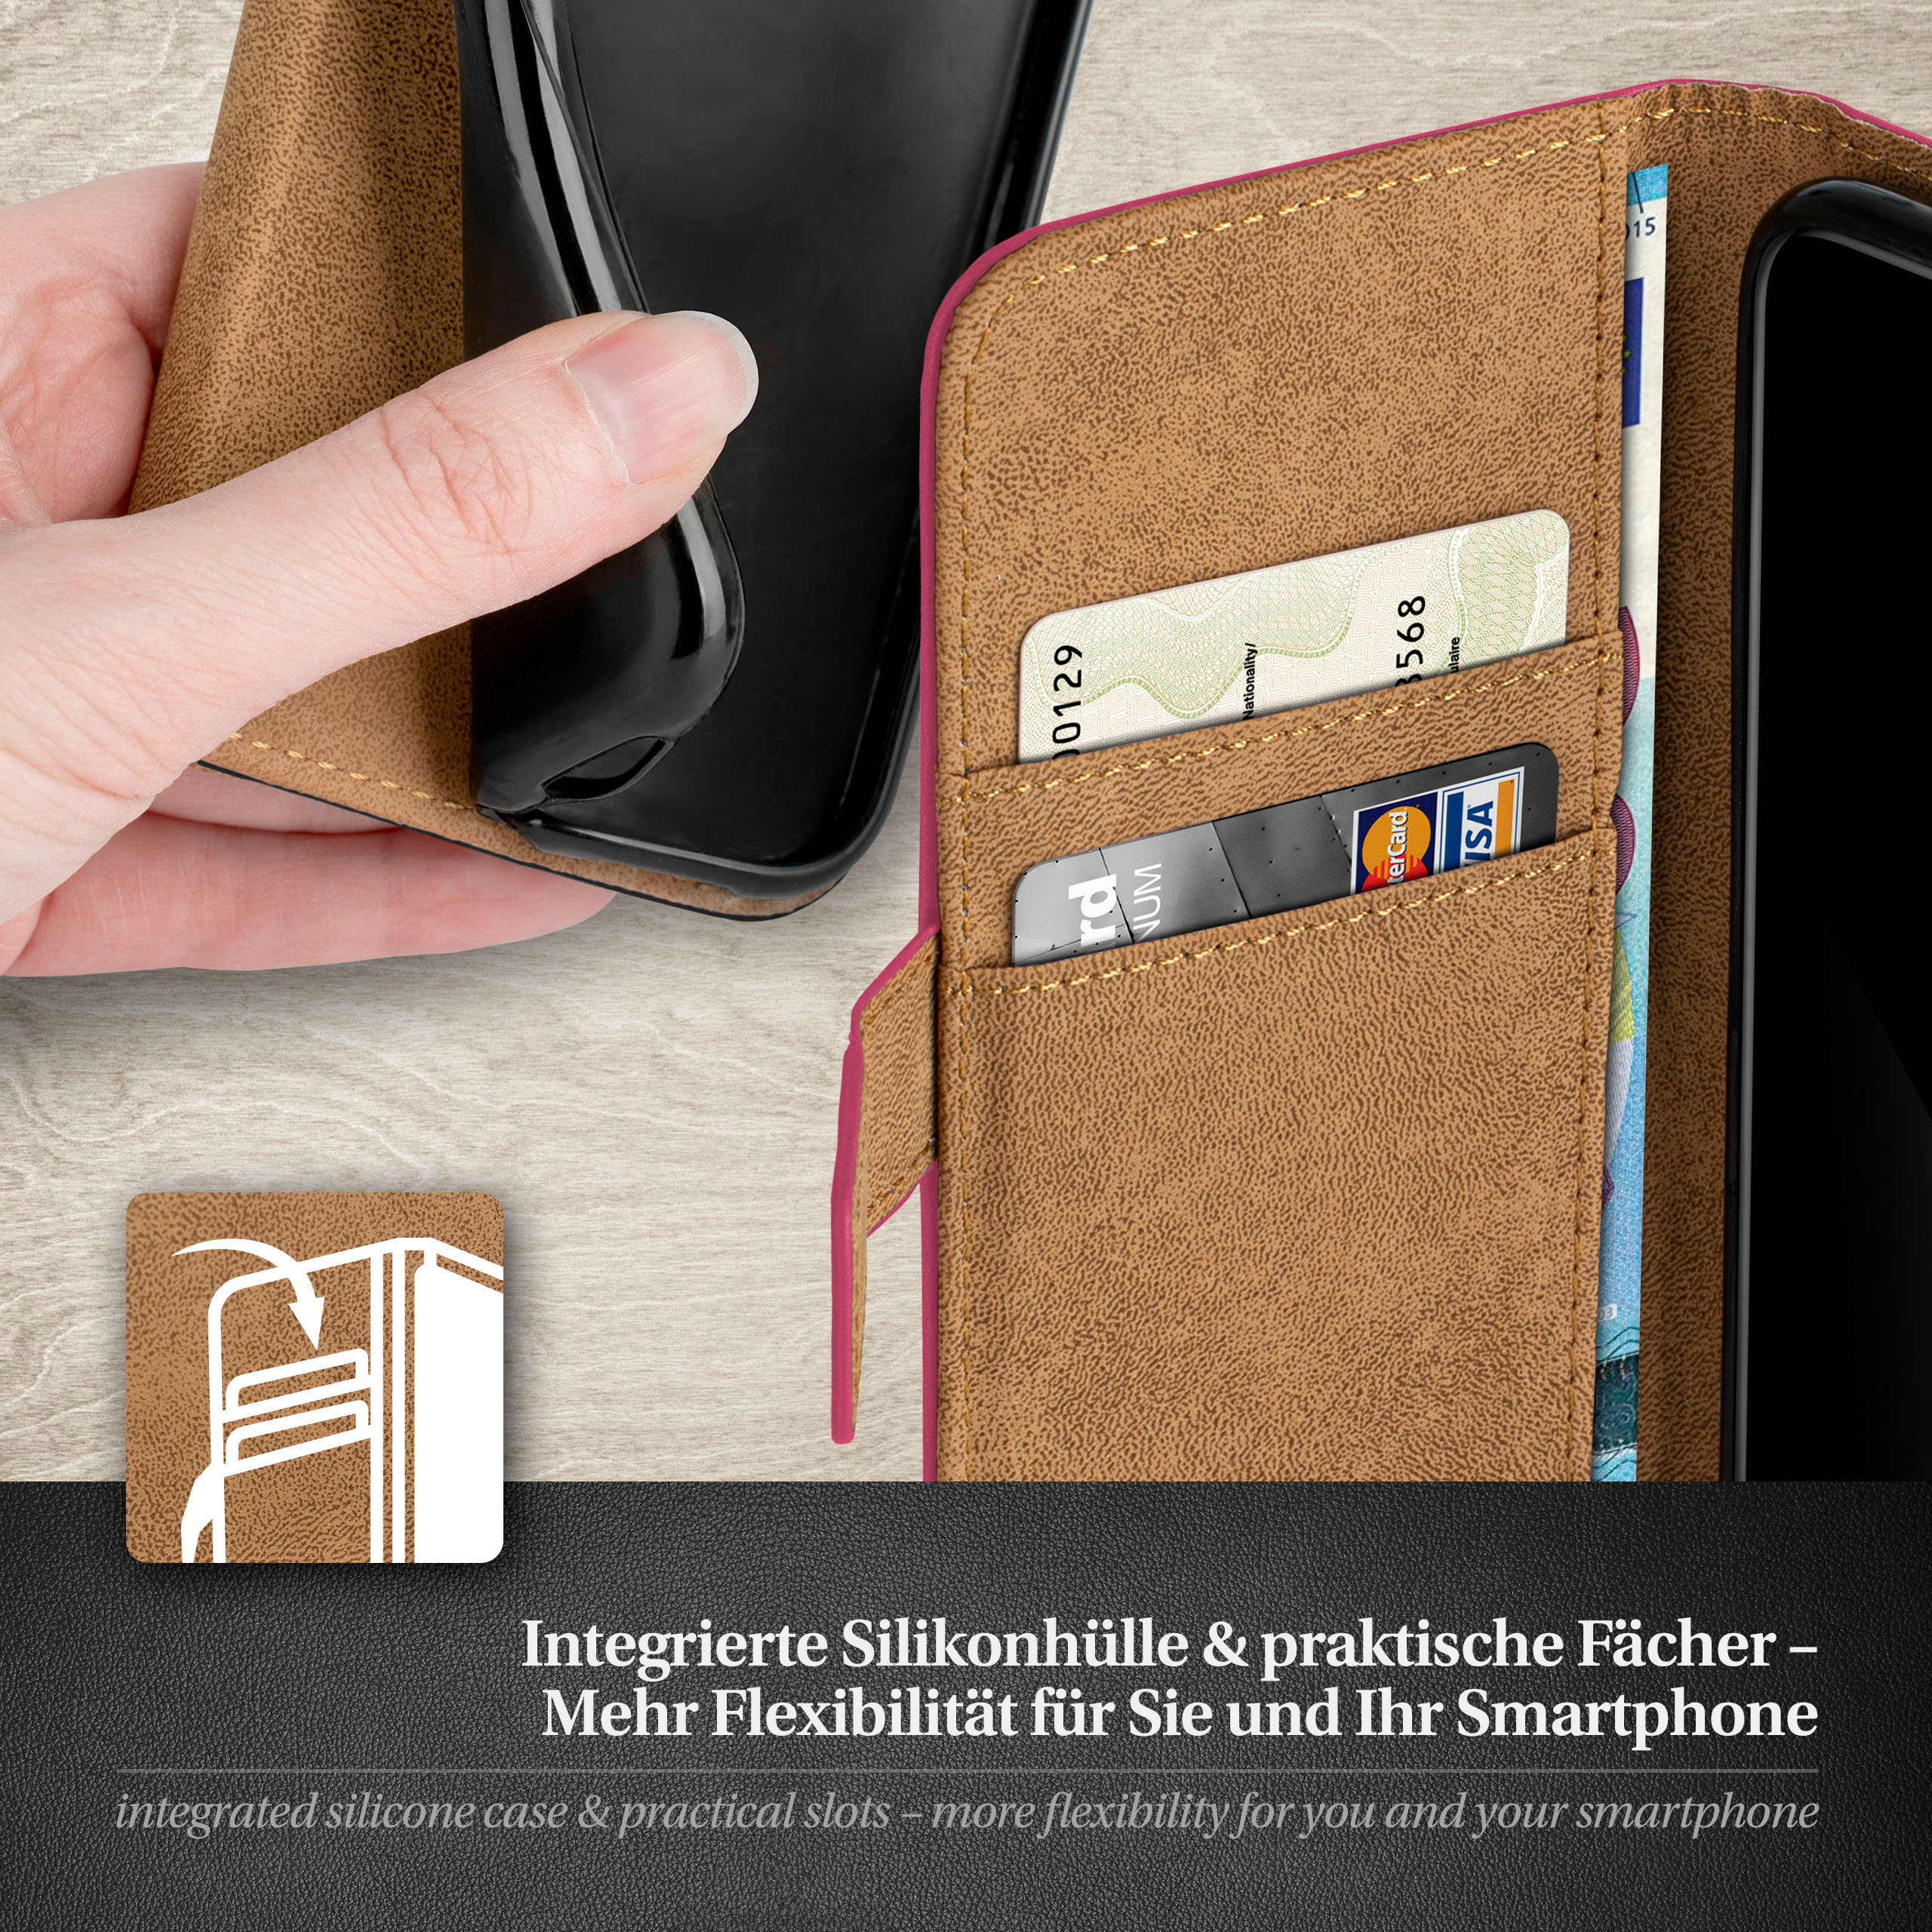 Note Galaxy Berry-Fuchsia Book Samsung, Case, Bookcover, MOEX 3,